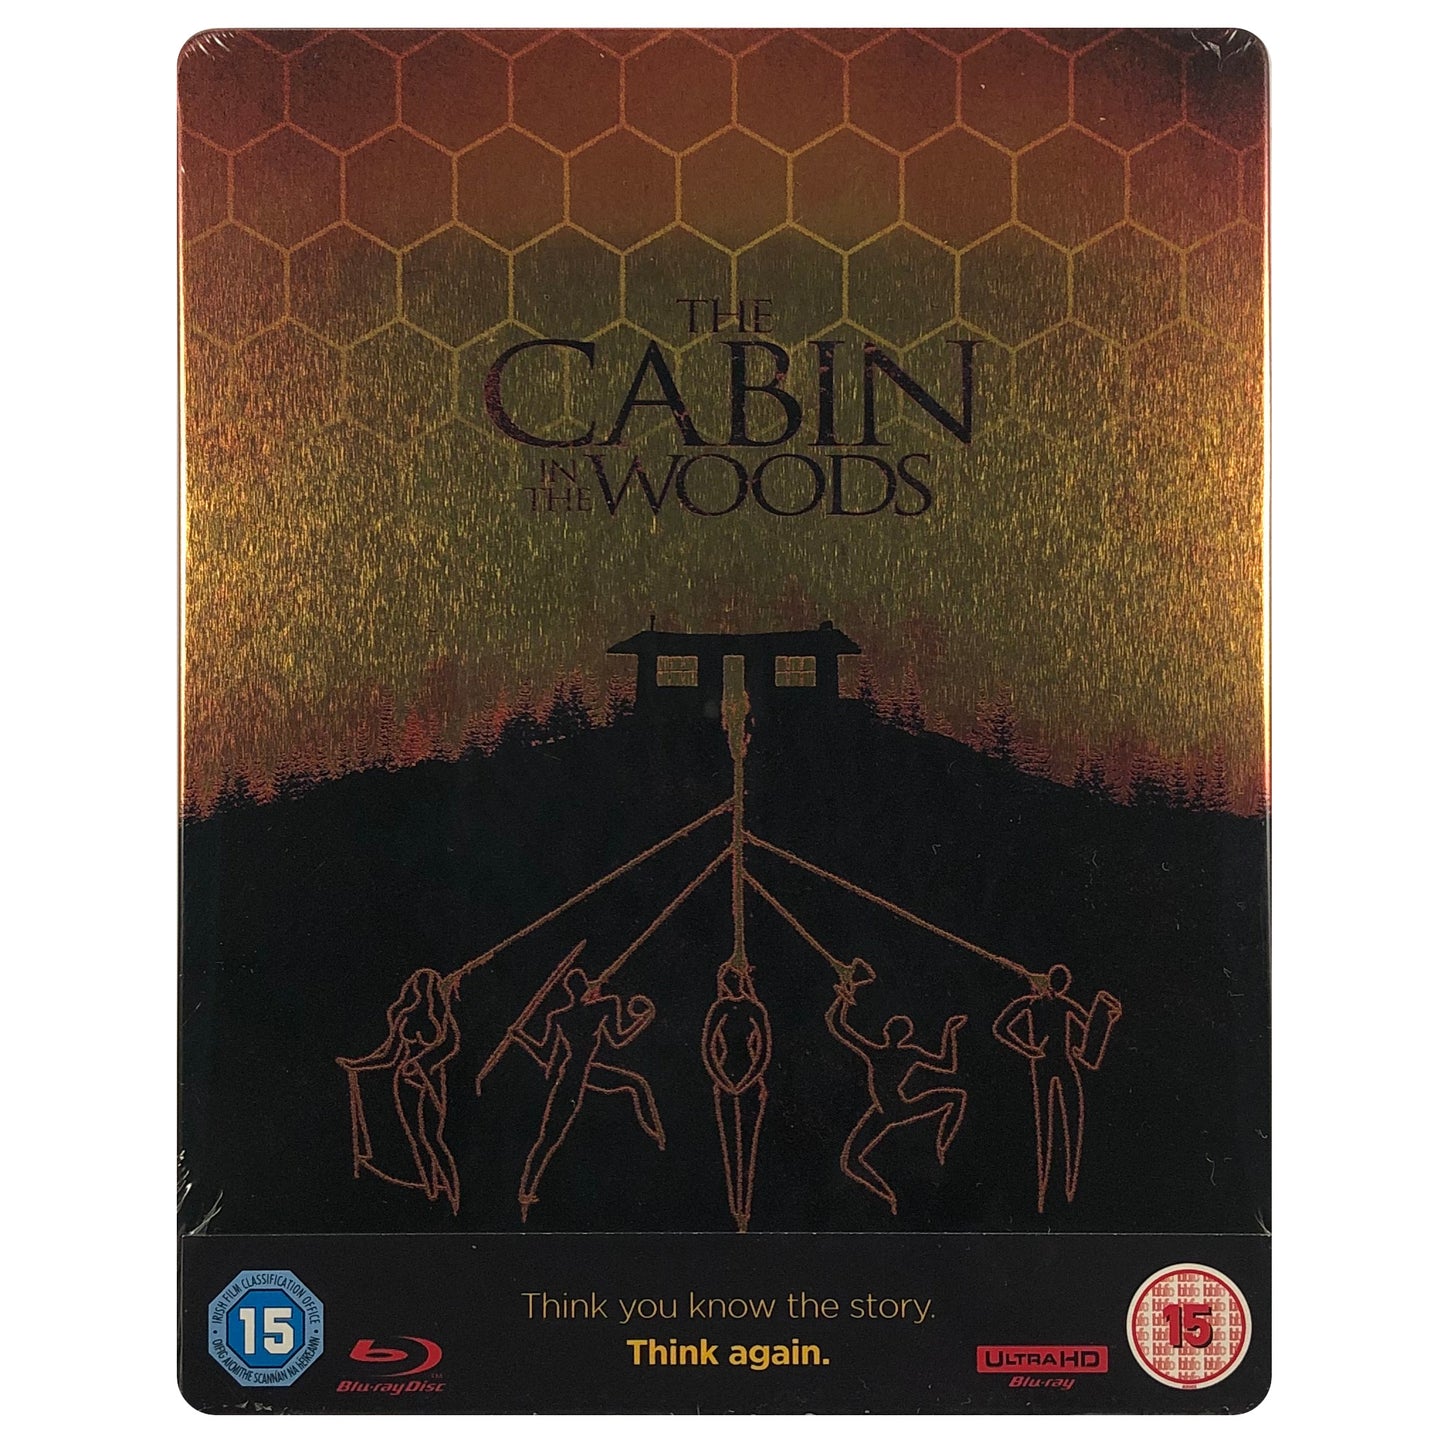 The Cabin In The Woods 4K Steelbook